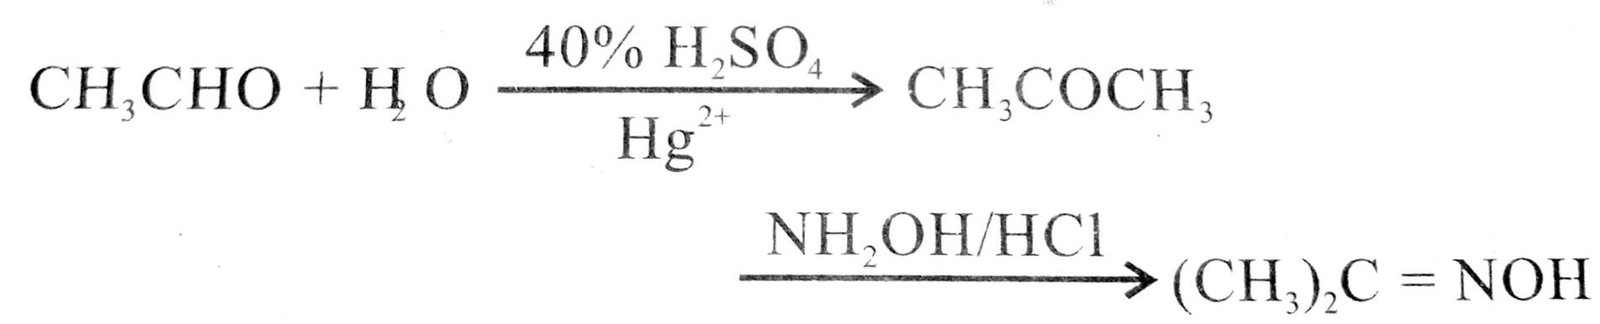 Acetoxime from acetaldehyde